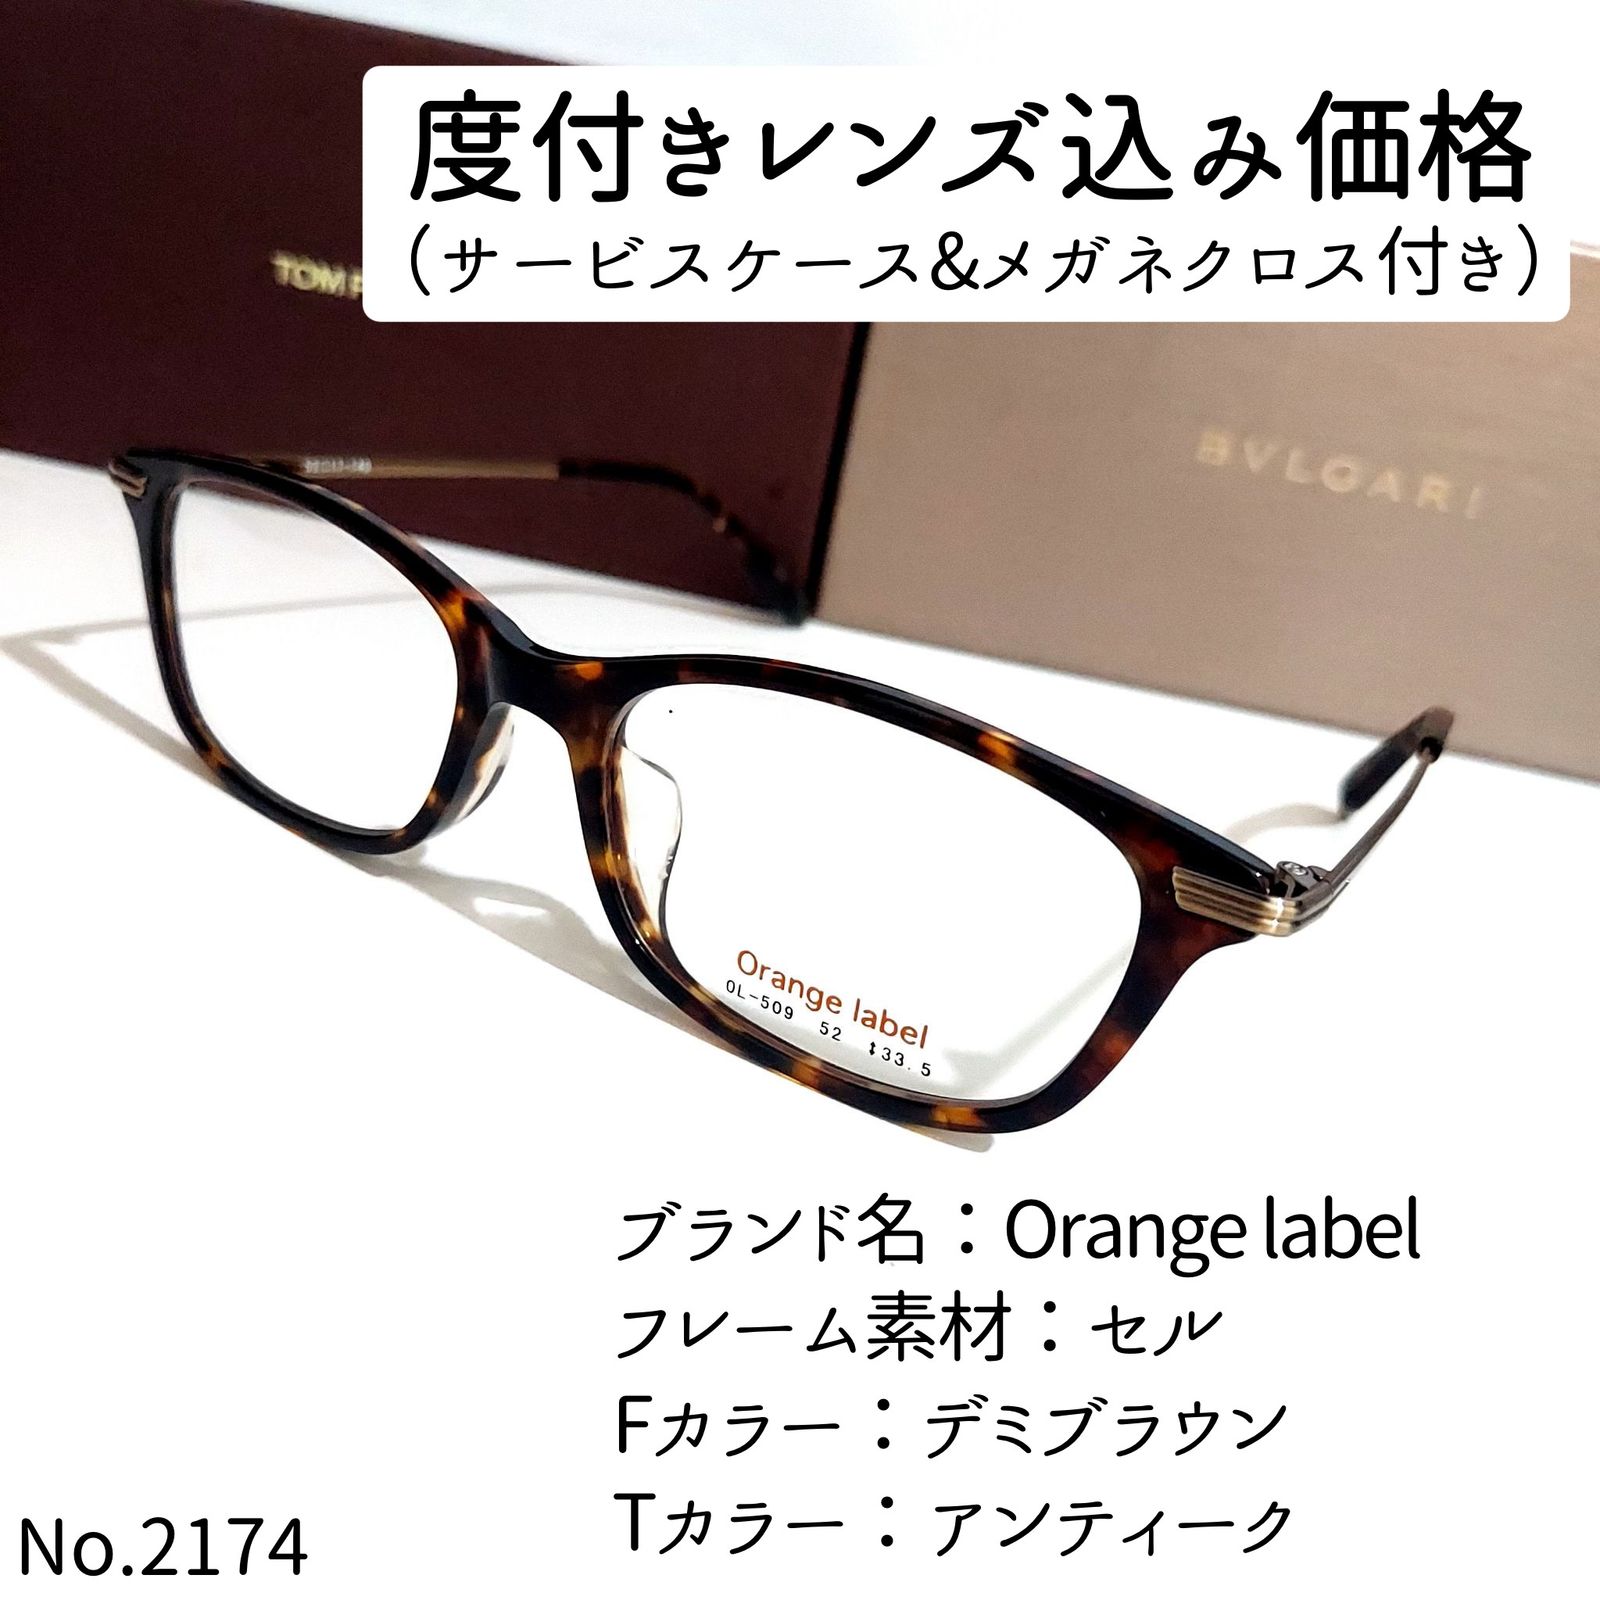 No.2174+メガネ Orange label【度数入り込み価格】-